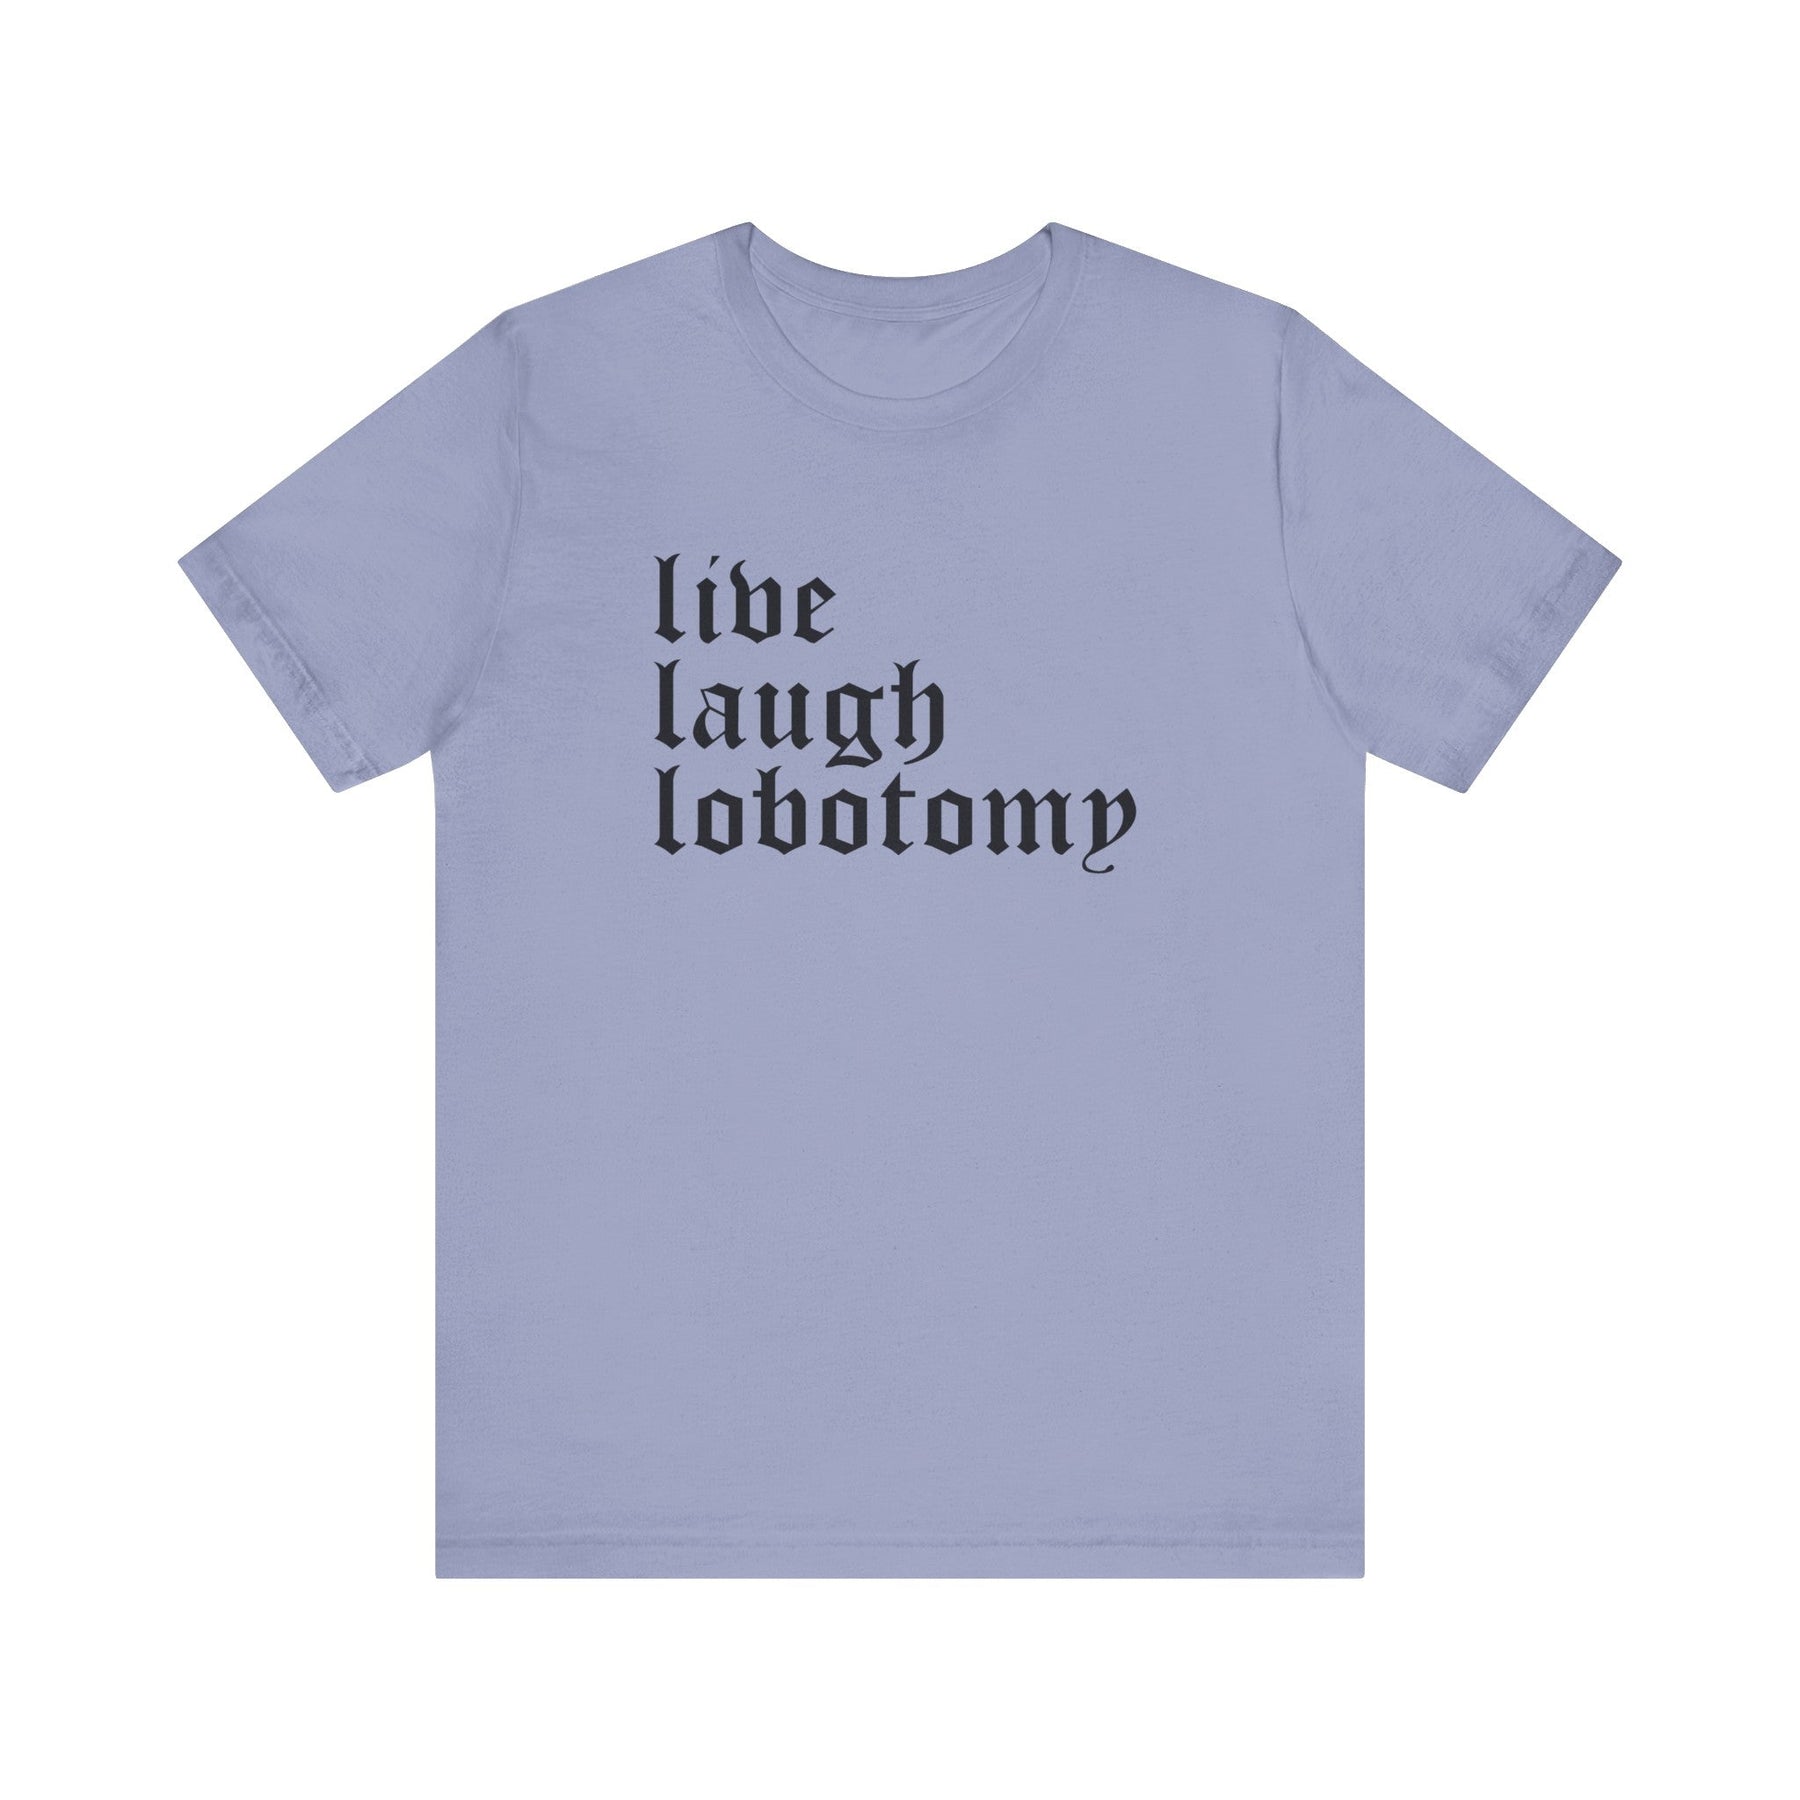 Live Laugh Lobotomy Short Sleeve Tee - Goth Cloth Co.T - Shirt95117046433420160735